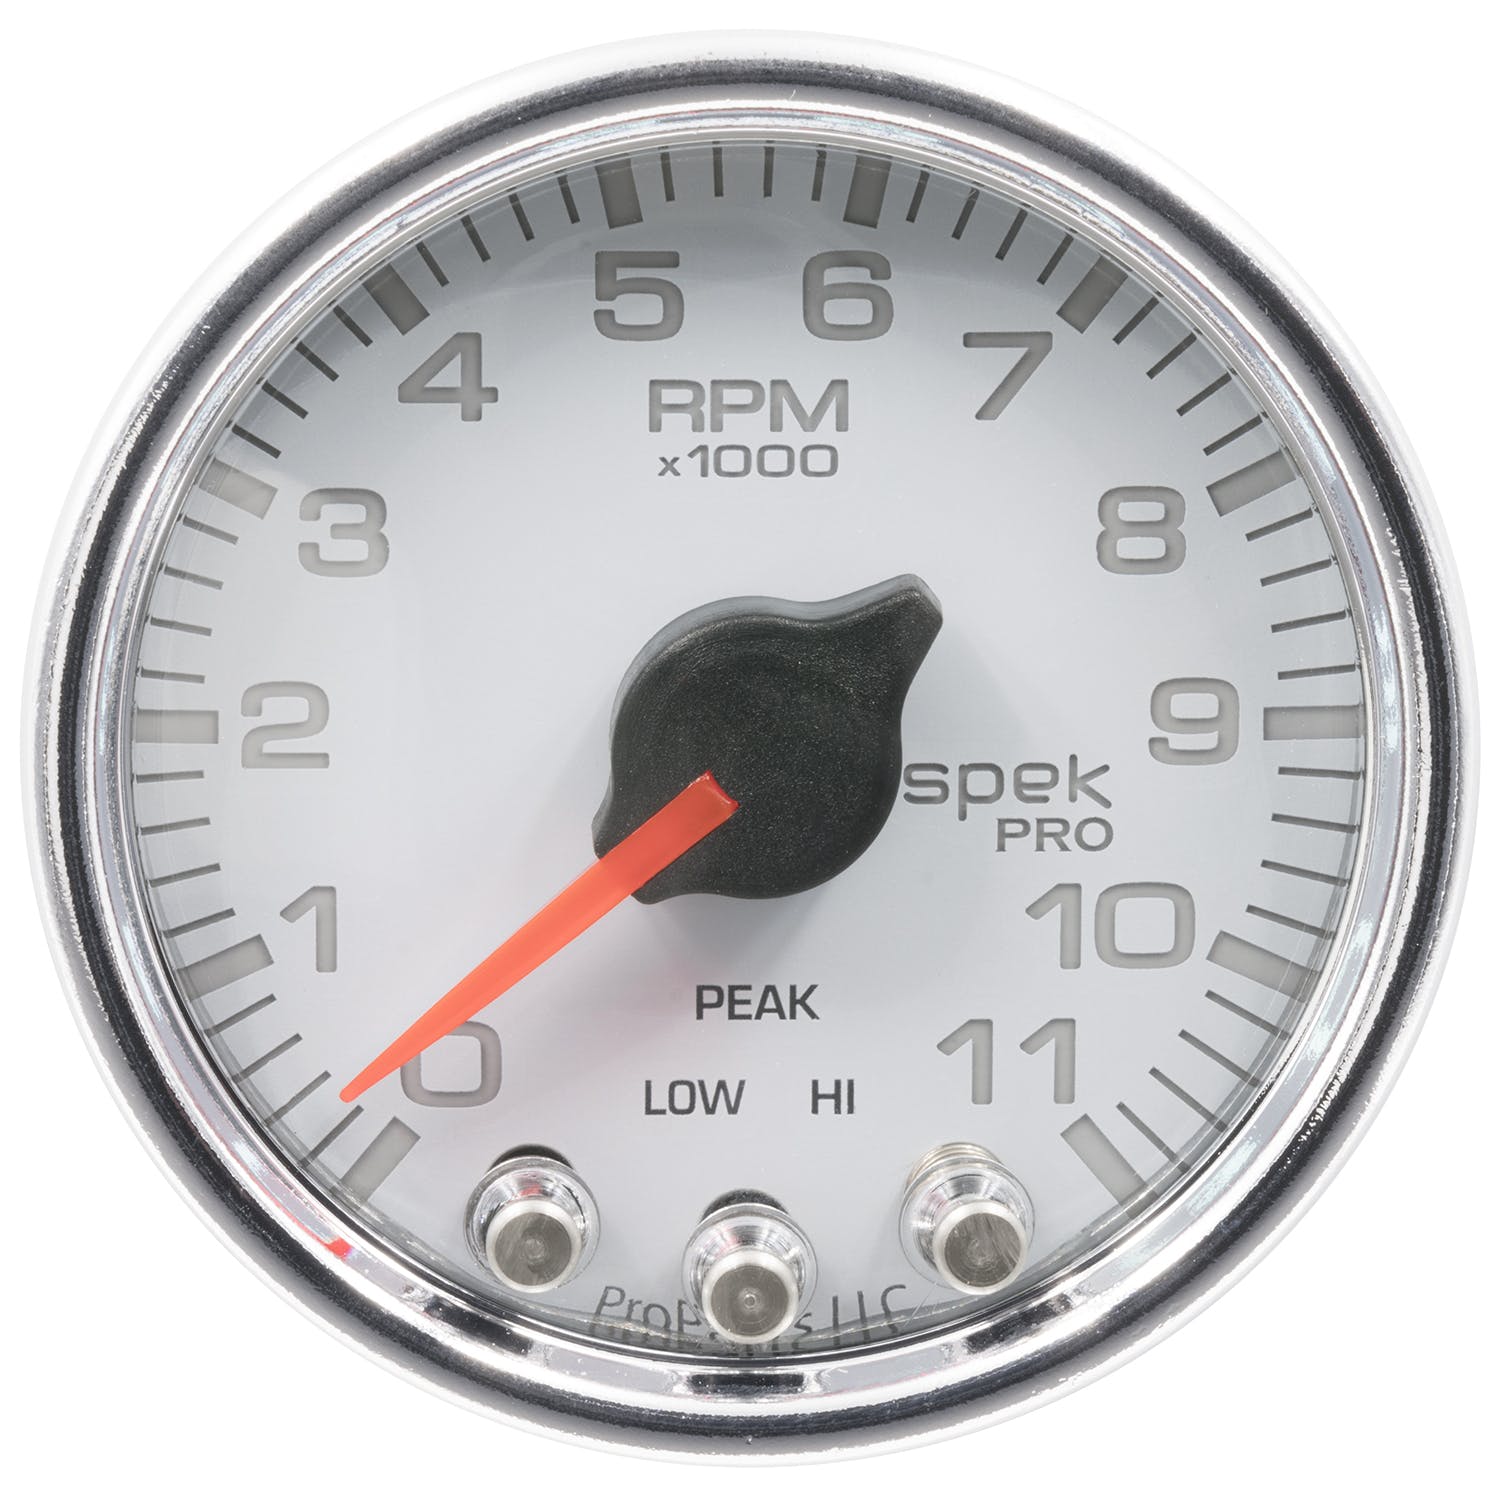 AutoMeter Products P33611 Tach 2in. 11k RPM w Shift Light/Pk Mem Wht/Chrm Spek